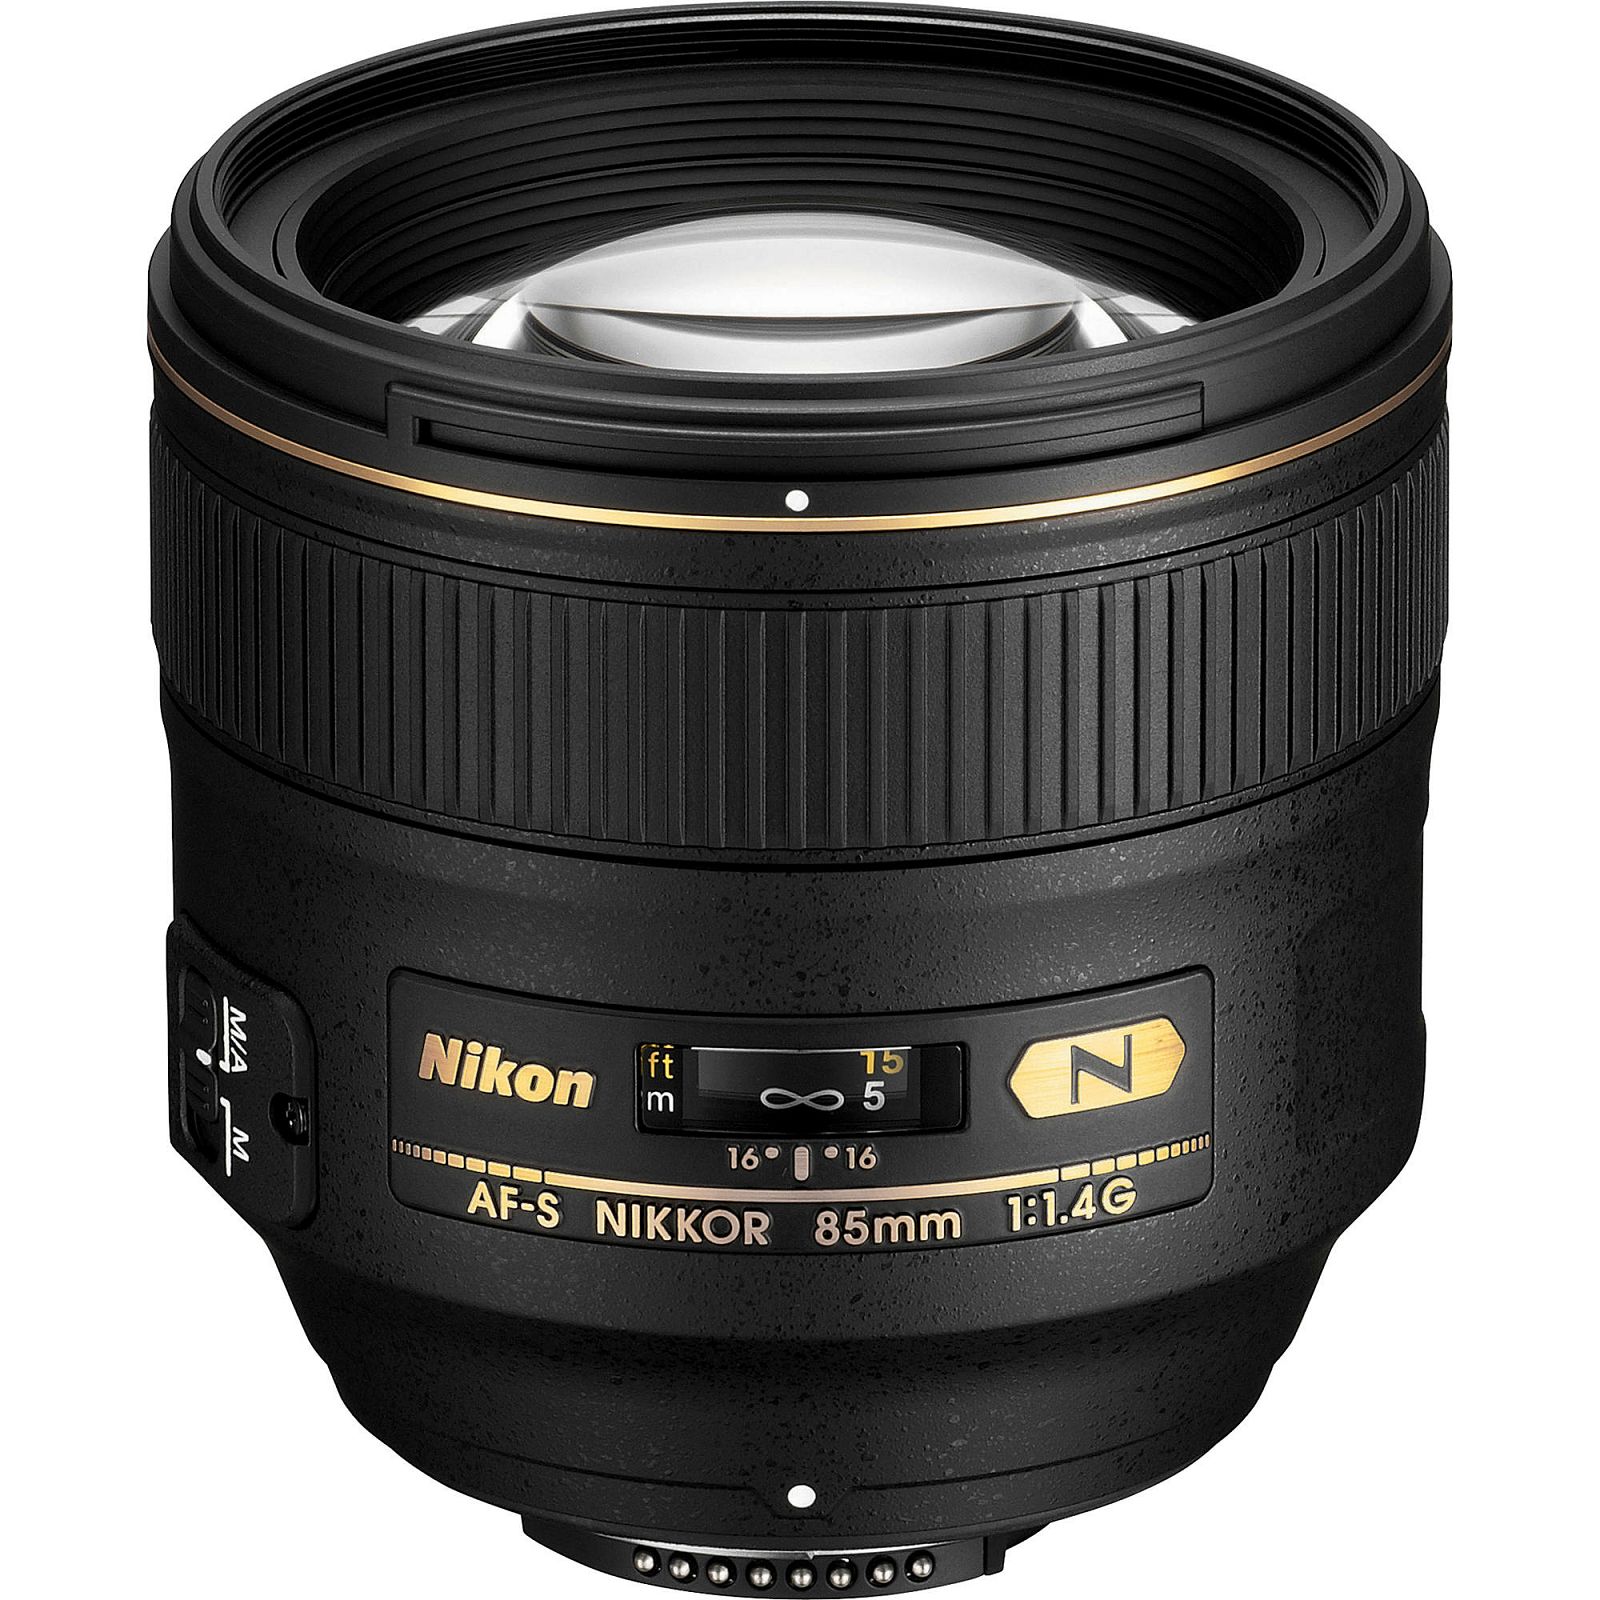 Nikon AF-S 85mm f/1.4G FX telefoto portretni objektiv Nikkor Professional auto focus prime lens 85 1.4G F1.4 G (JAA338DA)